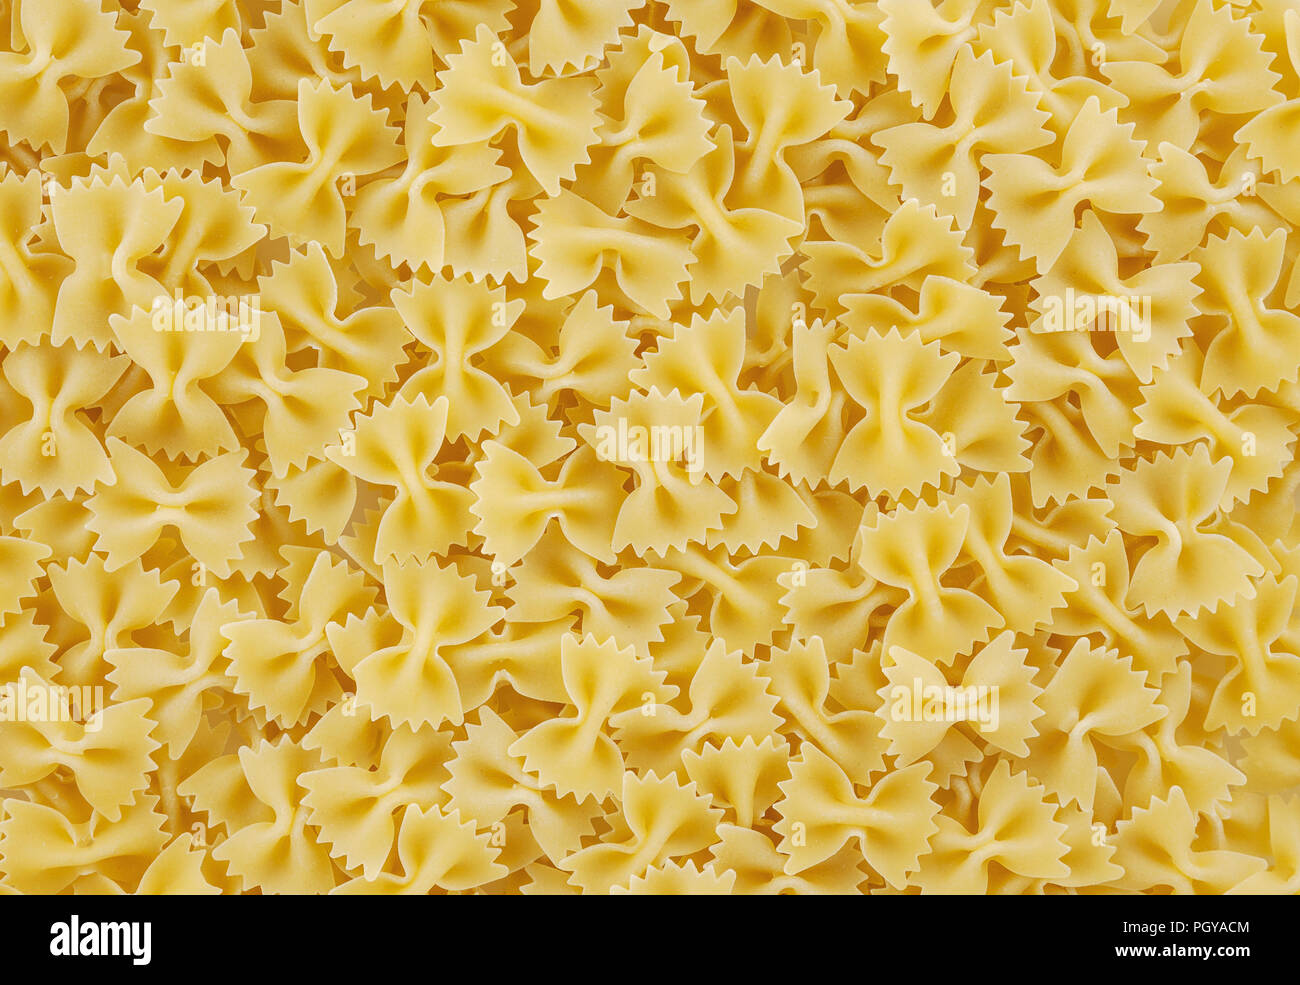 Bow tie pasta background Stock Photo